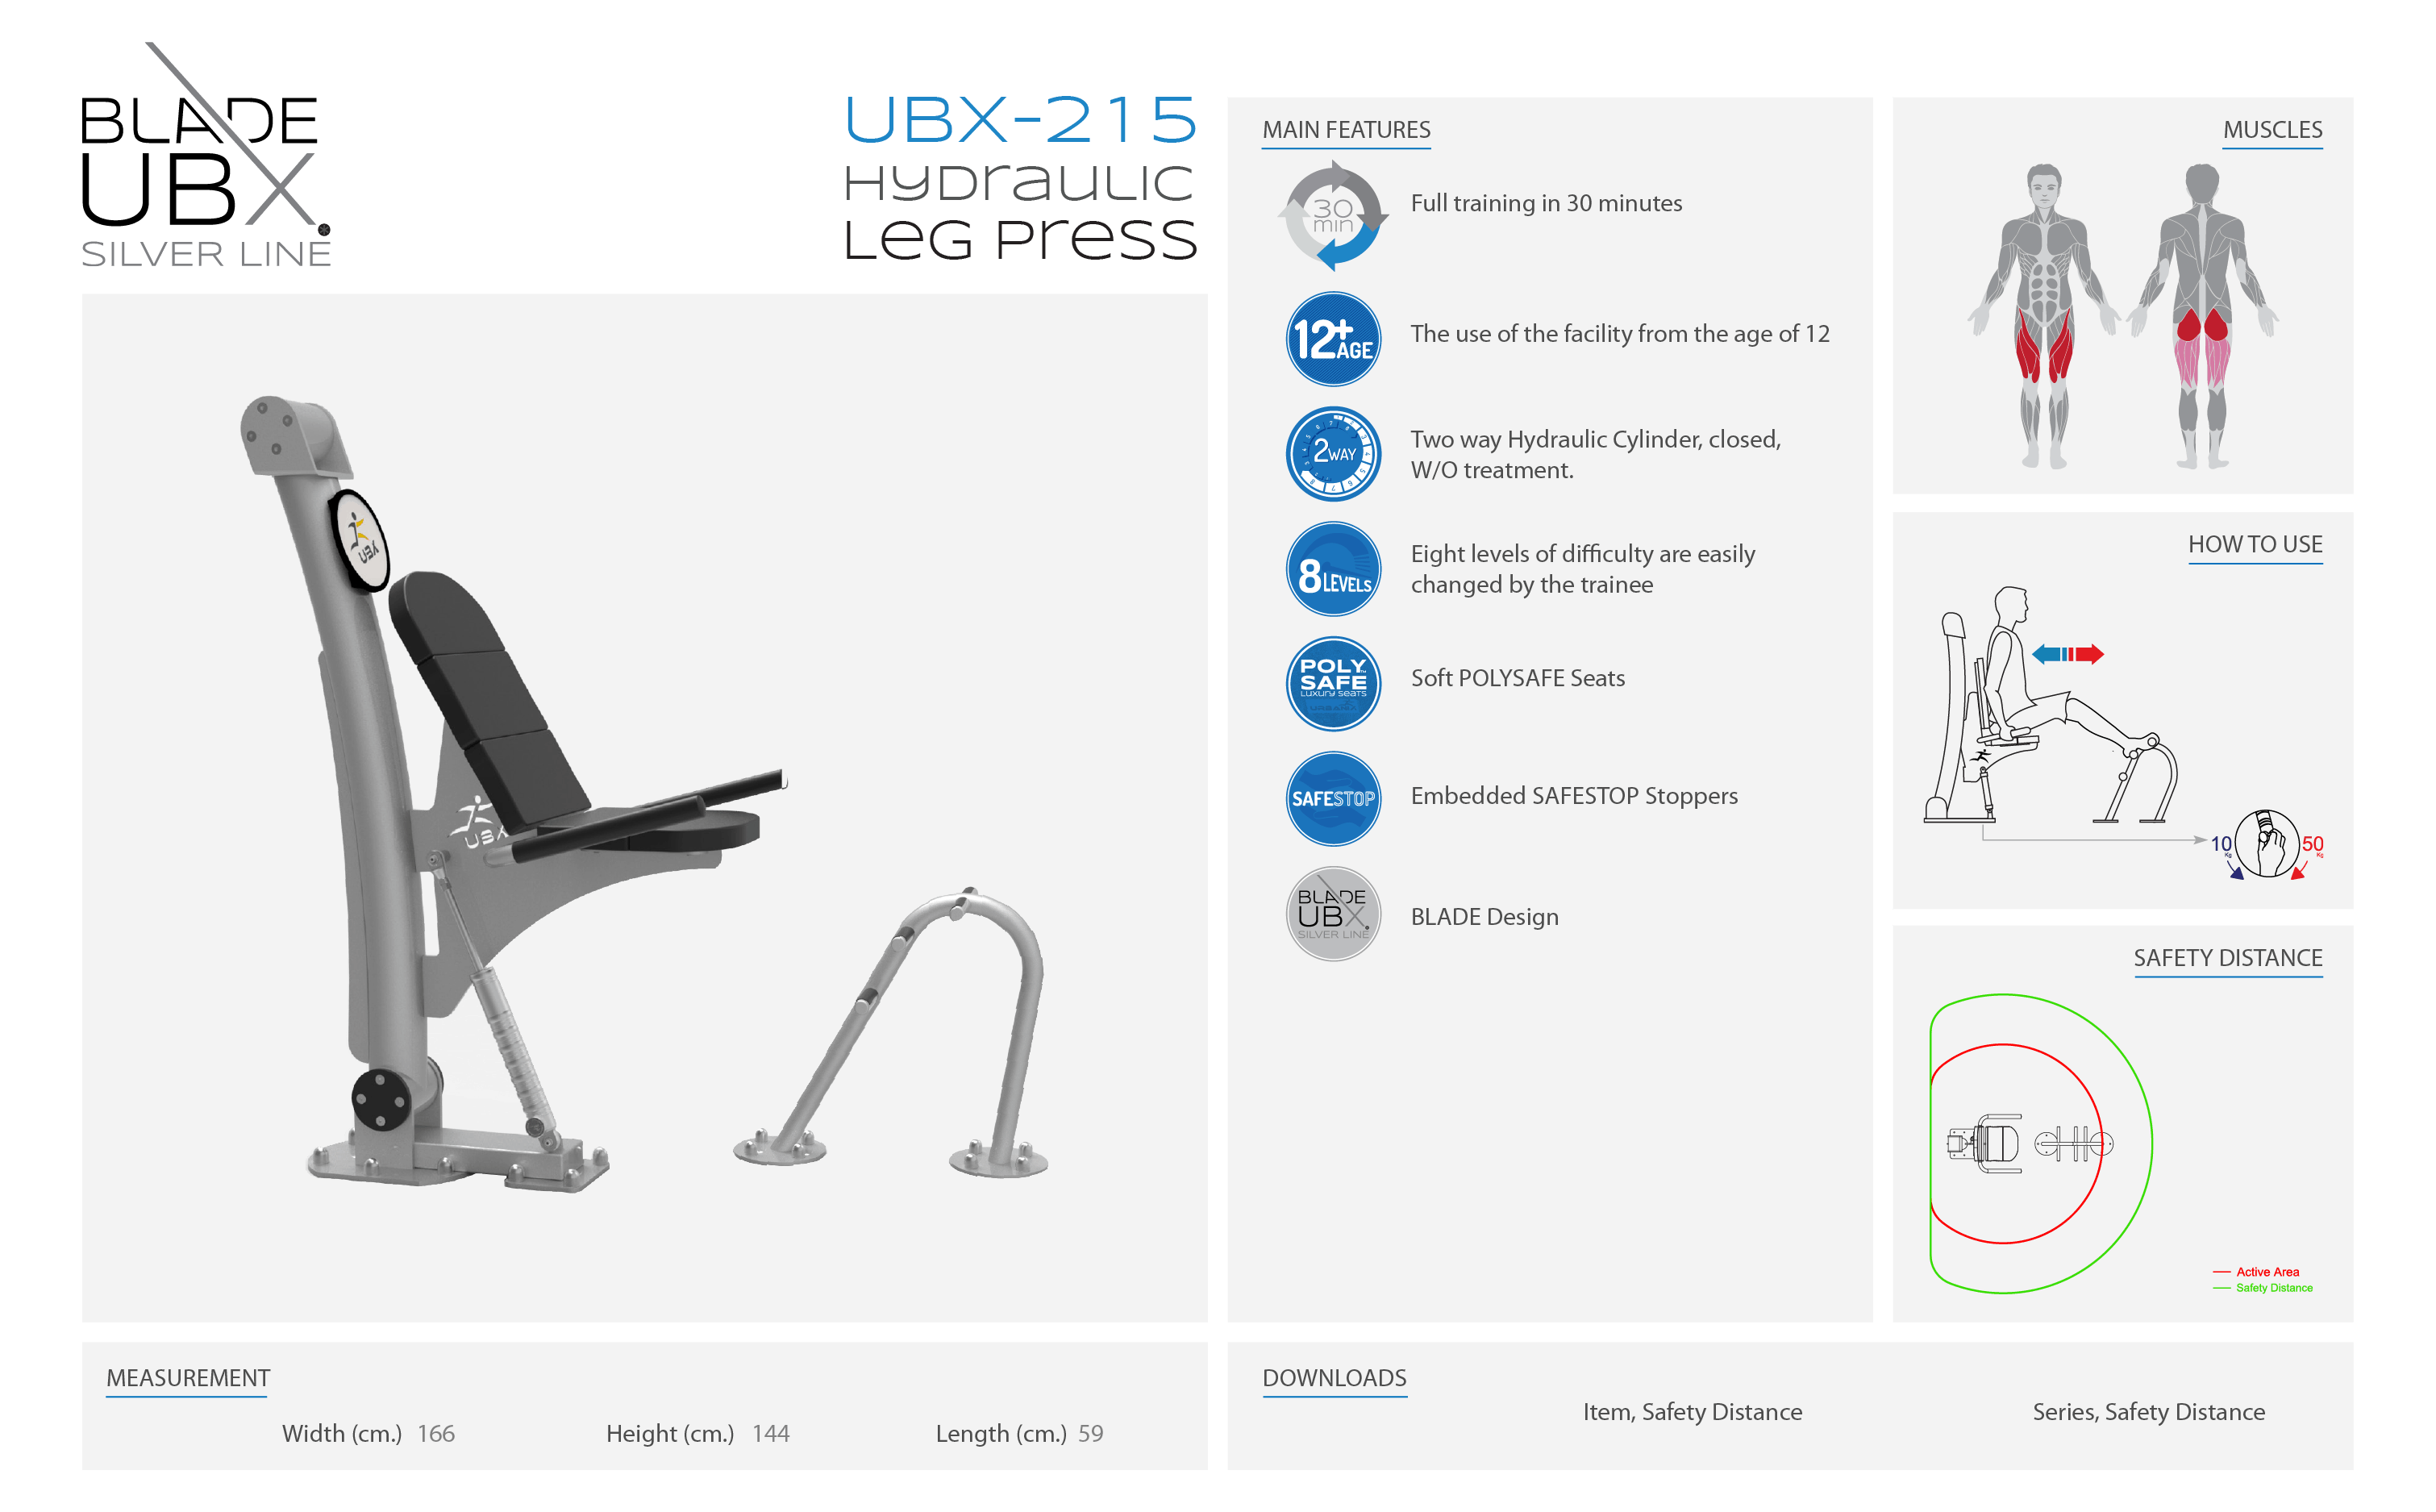 ubx-215 hydraulic leg press -  אורבניקס - מתקן כושר - דחיקת רגליים הידראולי